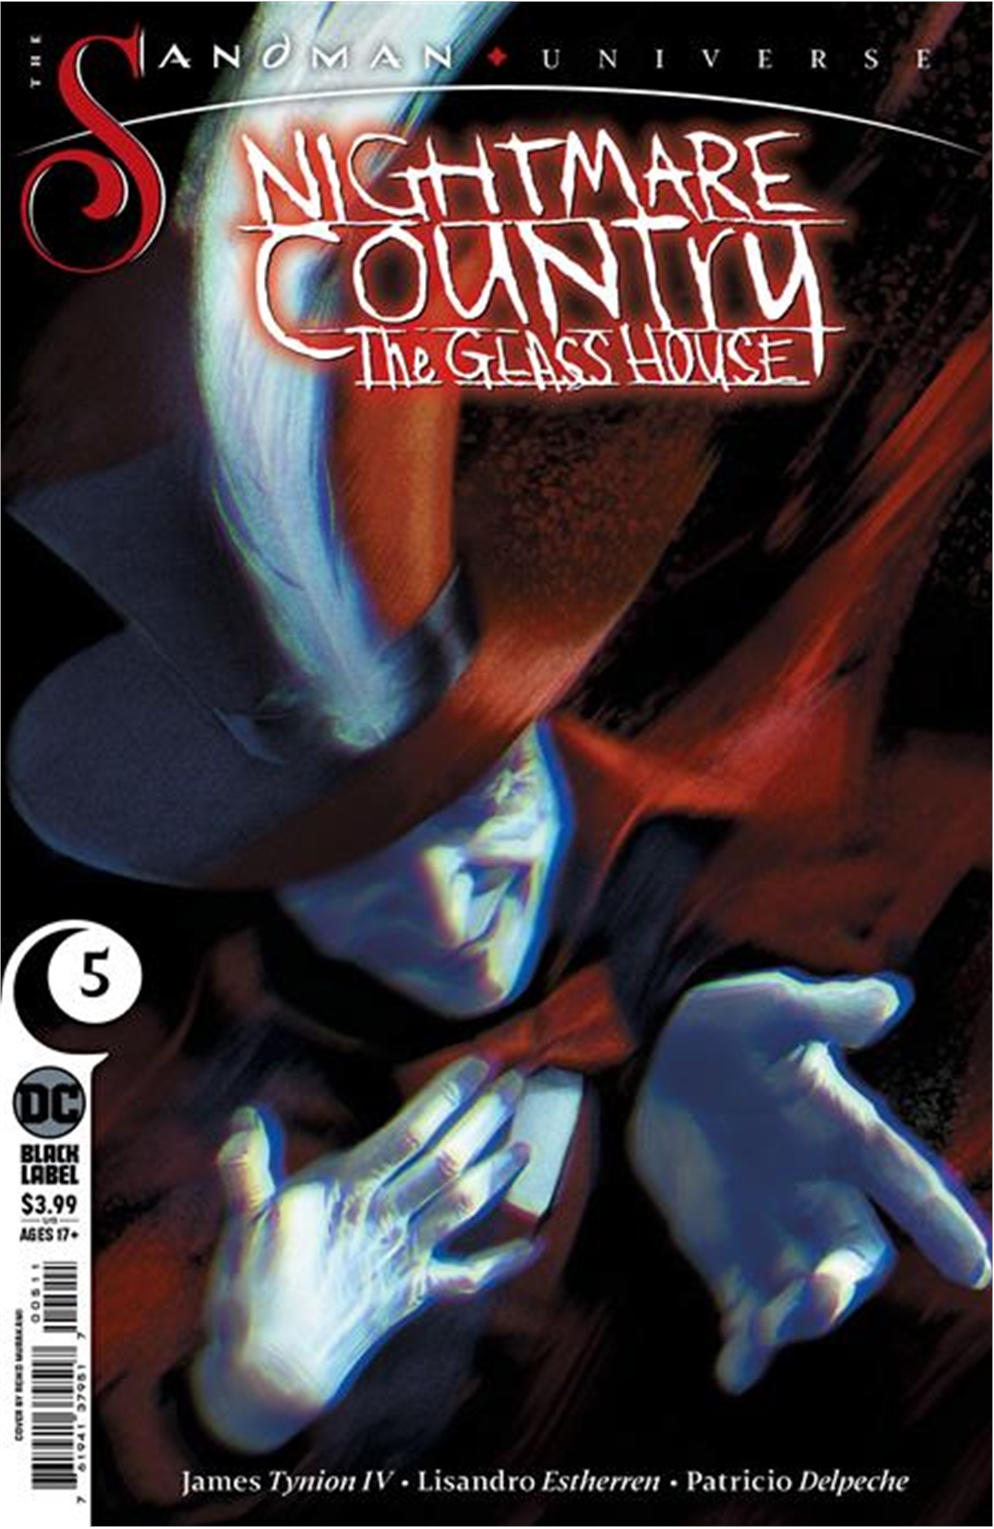 Sandman Universe Nightmare Country The Glass House #5 Cover A Reiko Murakami (Mature) (Of 6)